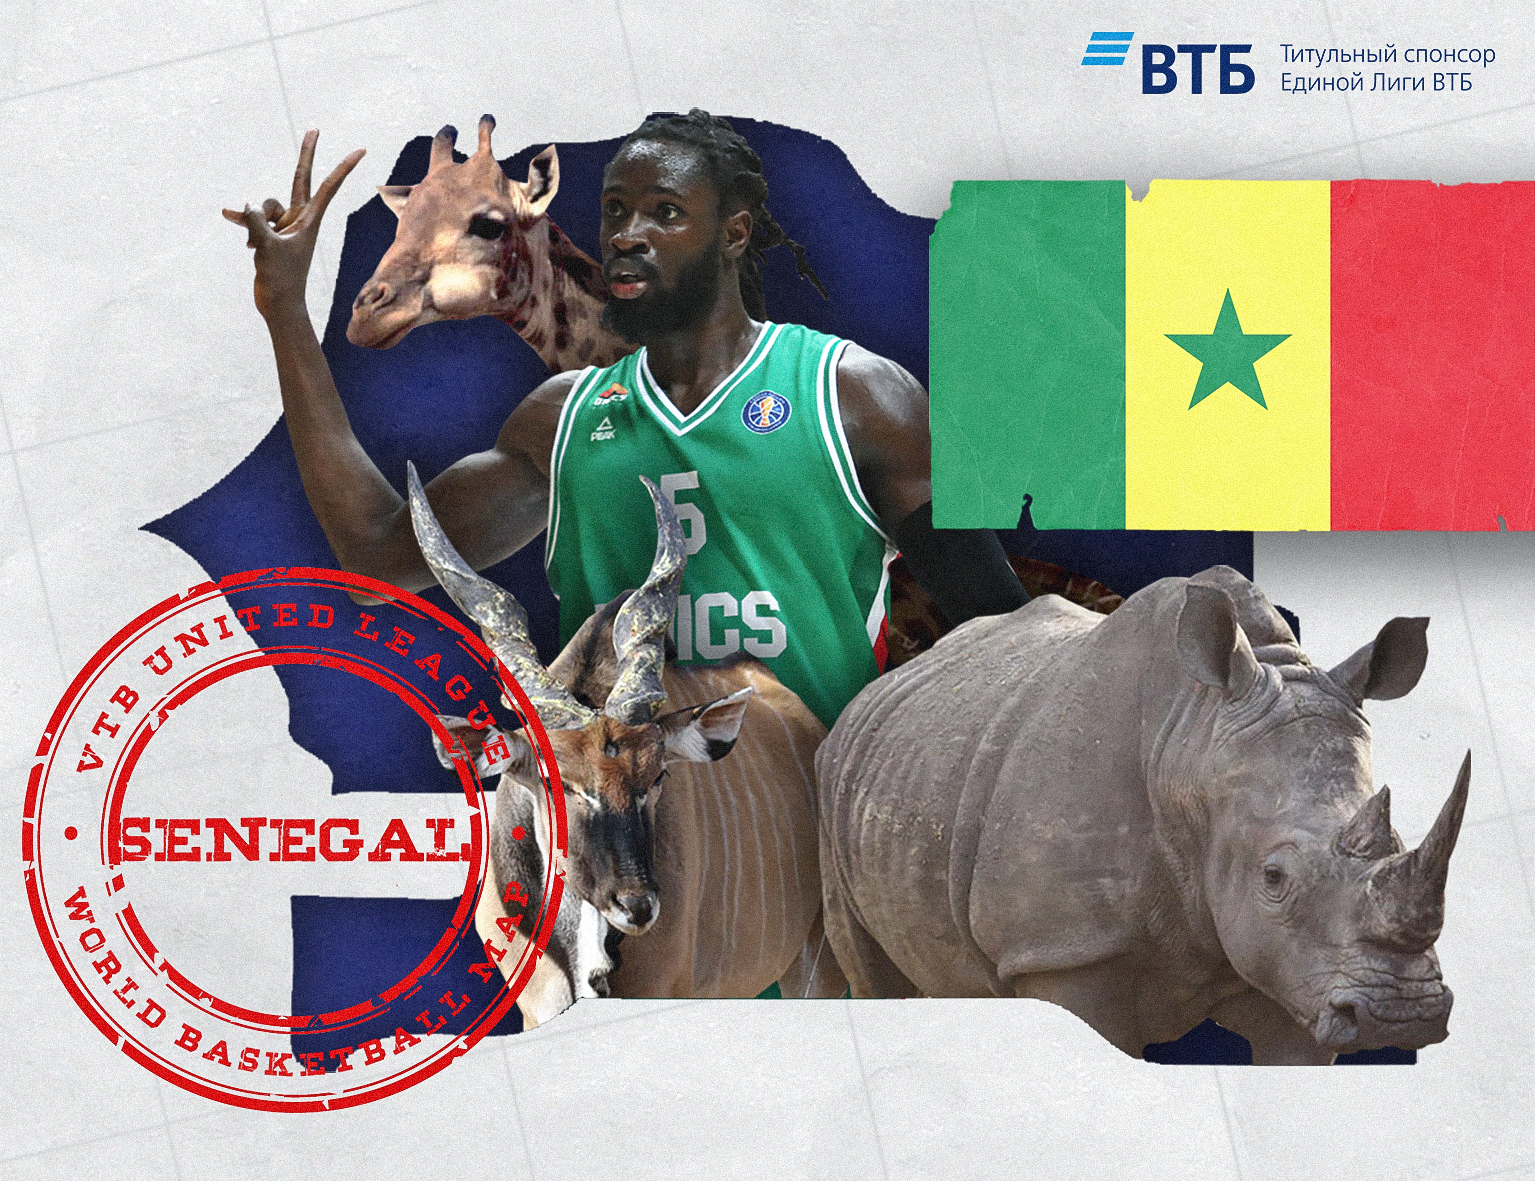 World basketball map: Senegal